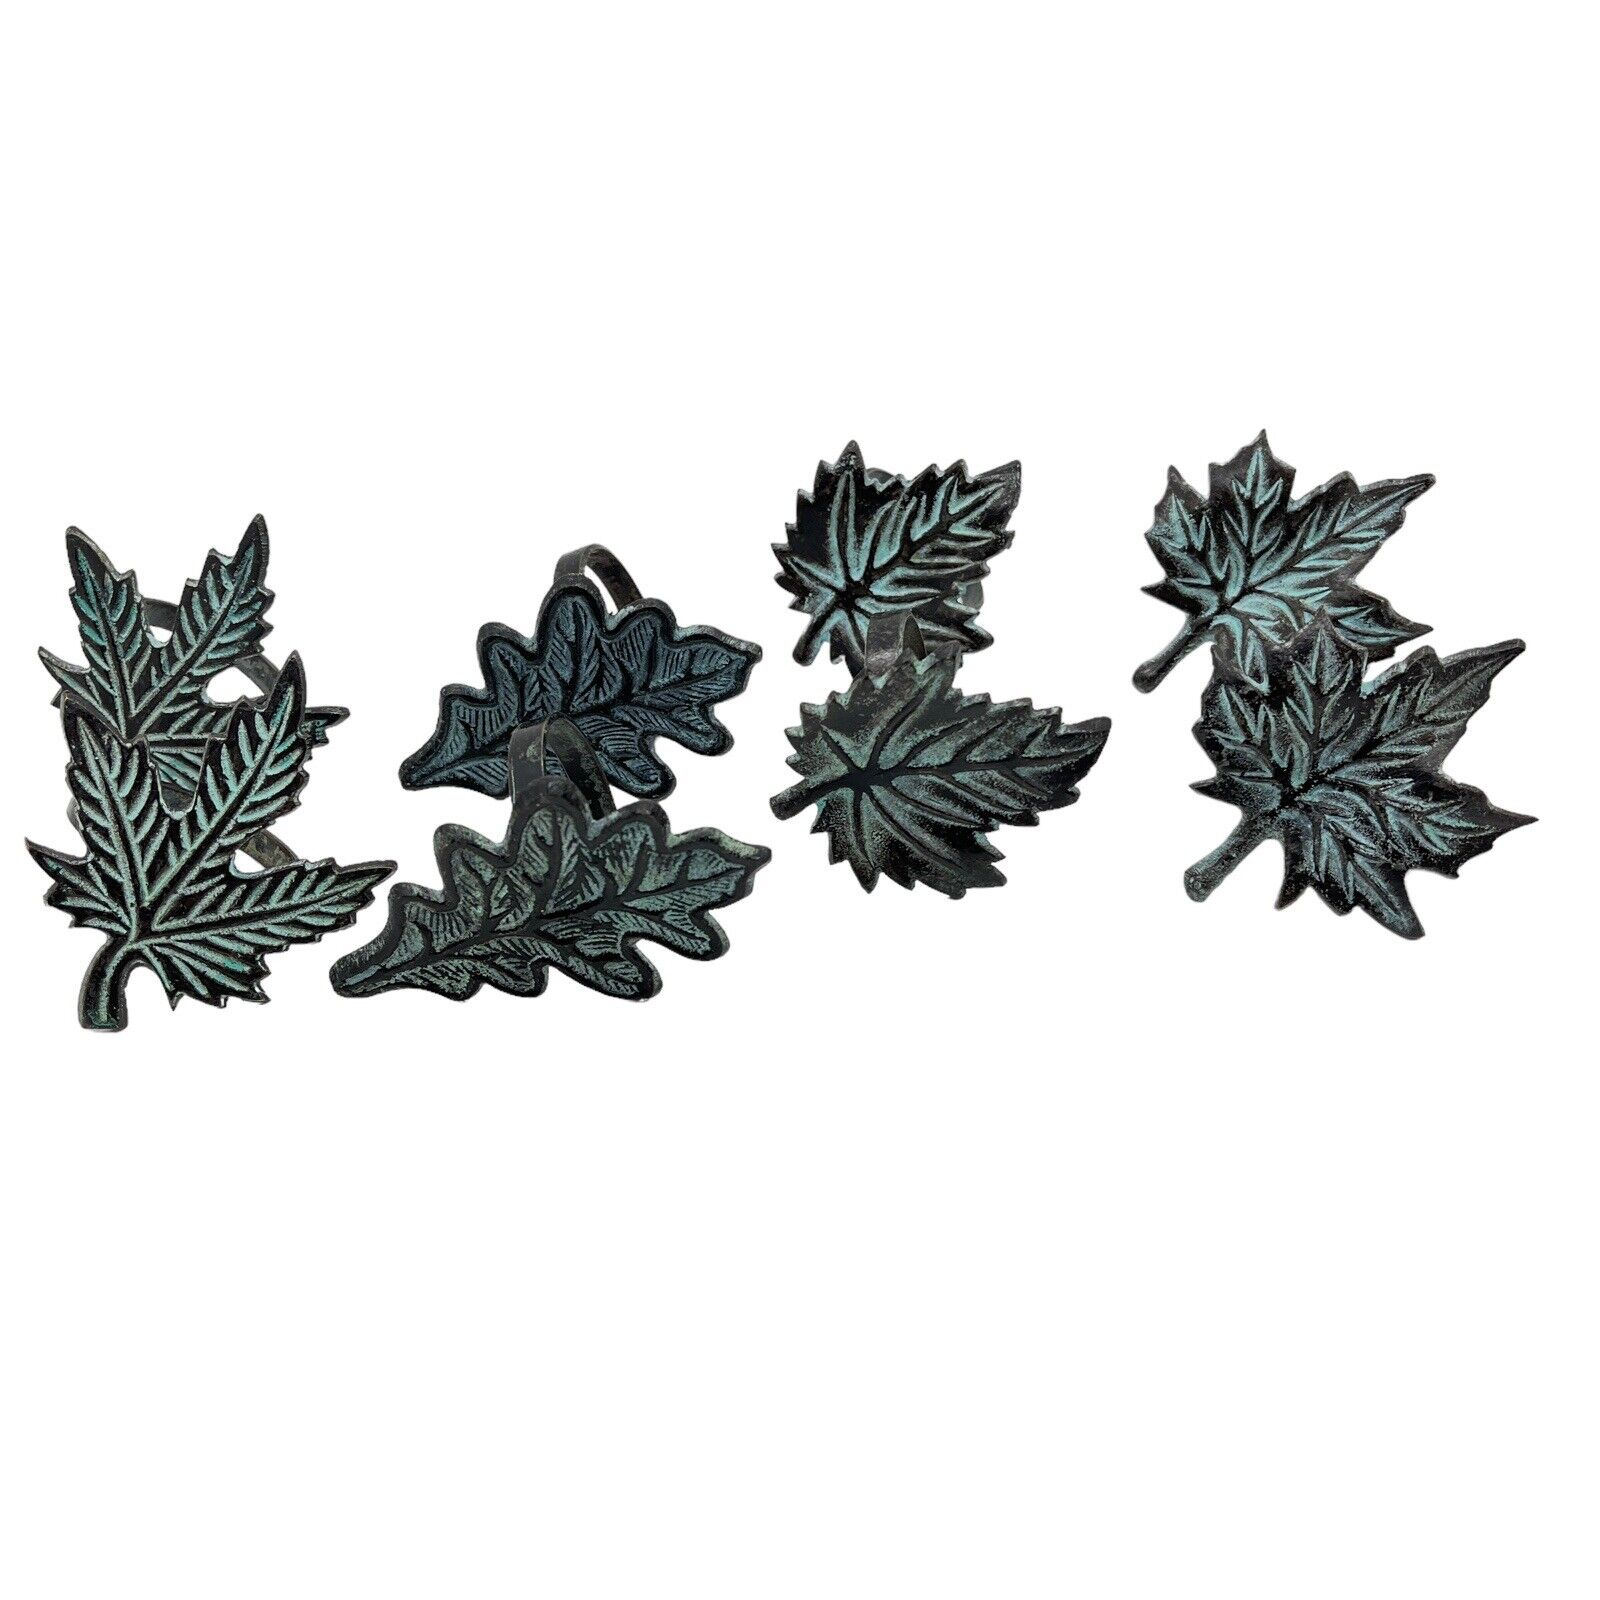 Napkin Rings Wrought Iron Leaf Set of 8 Faux Aged Verdigris Retro Table Setting